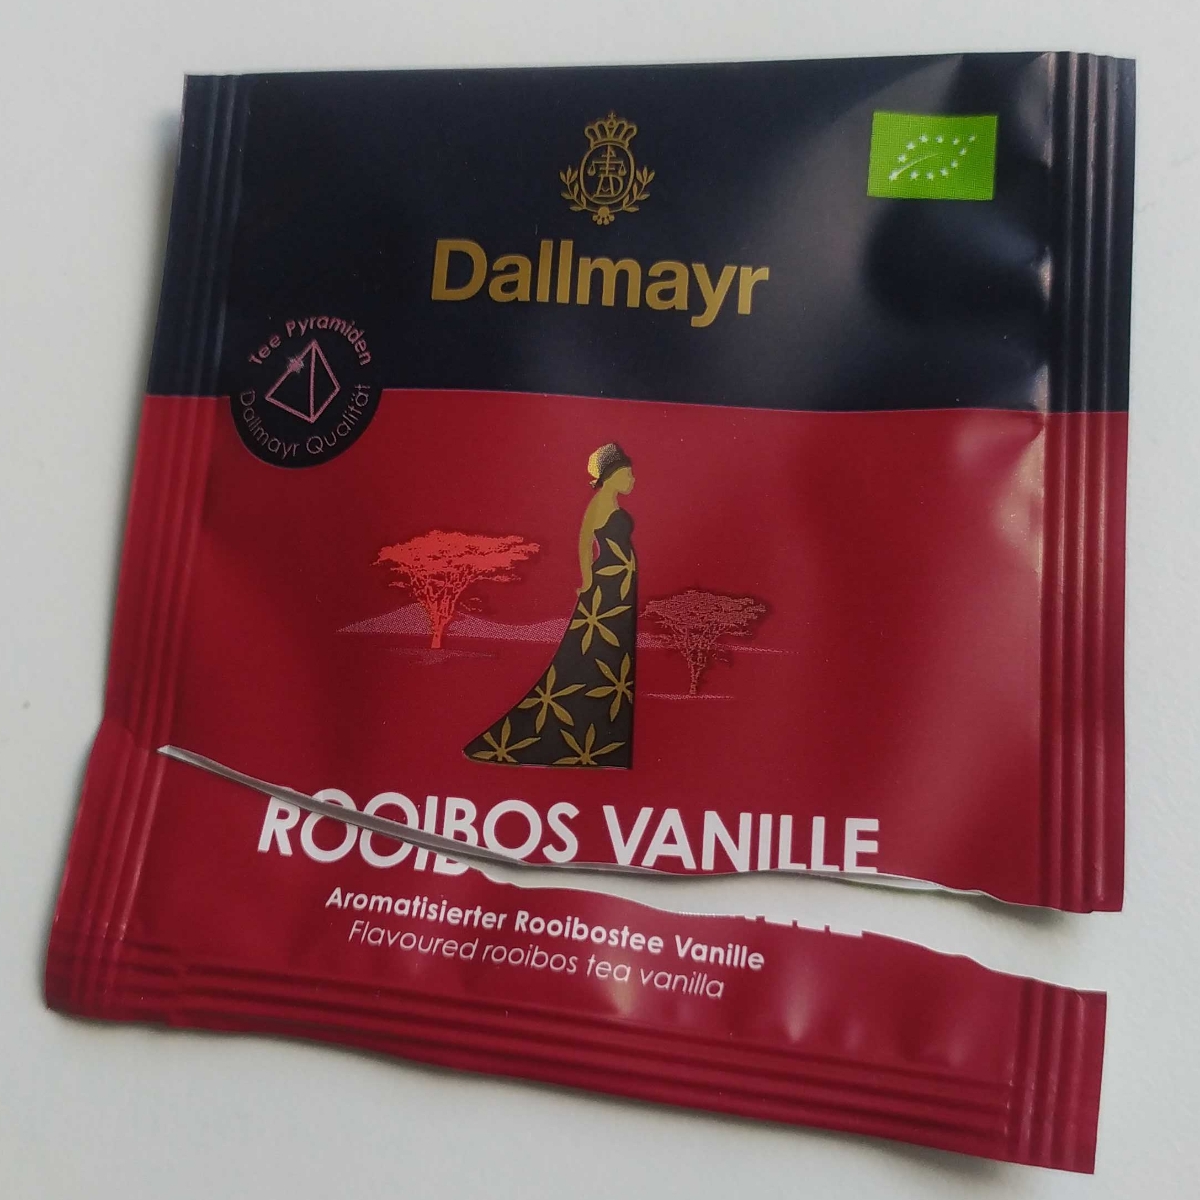 Dallmayr Rooibos Vanille Reviews